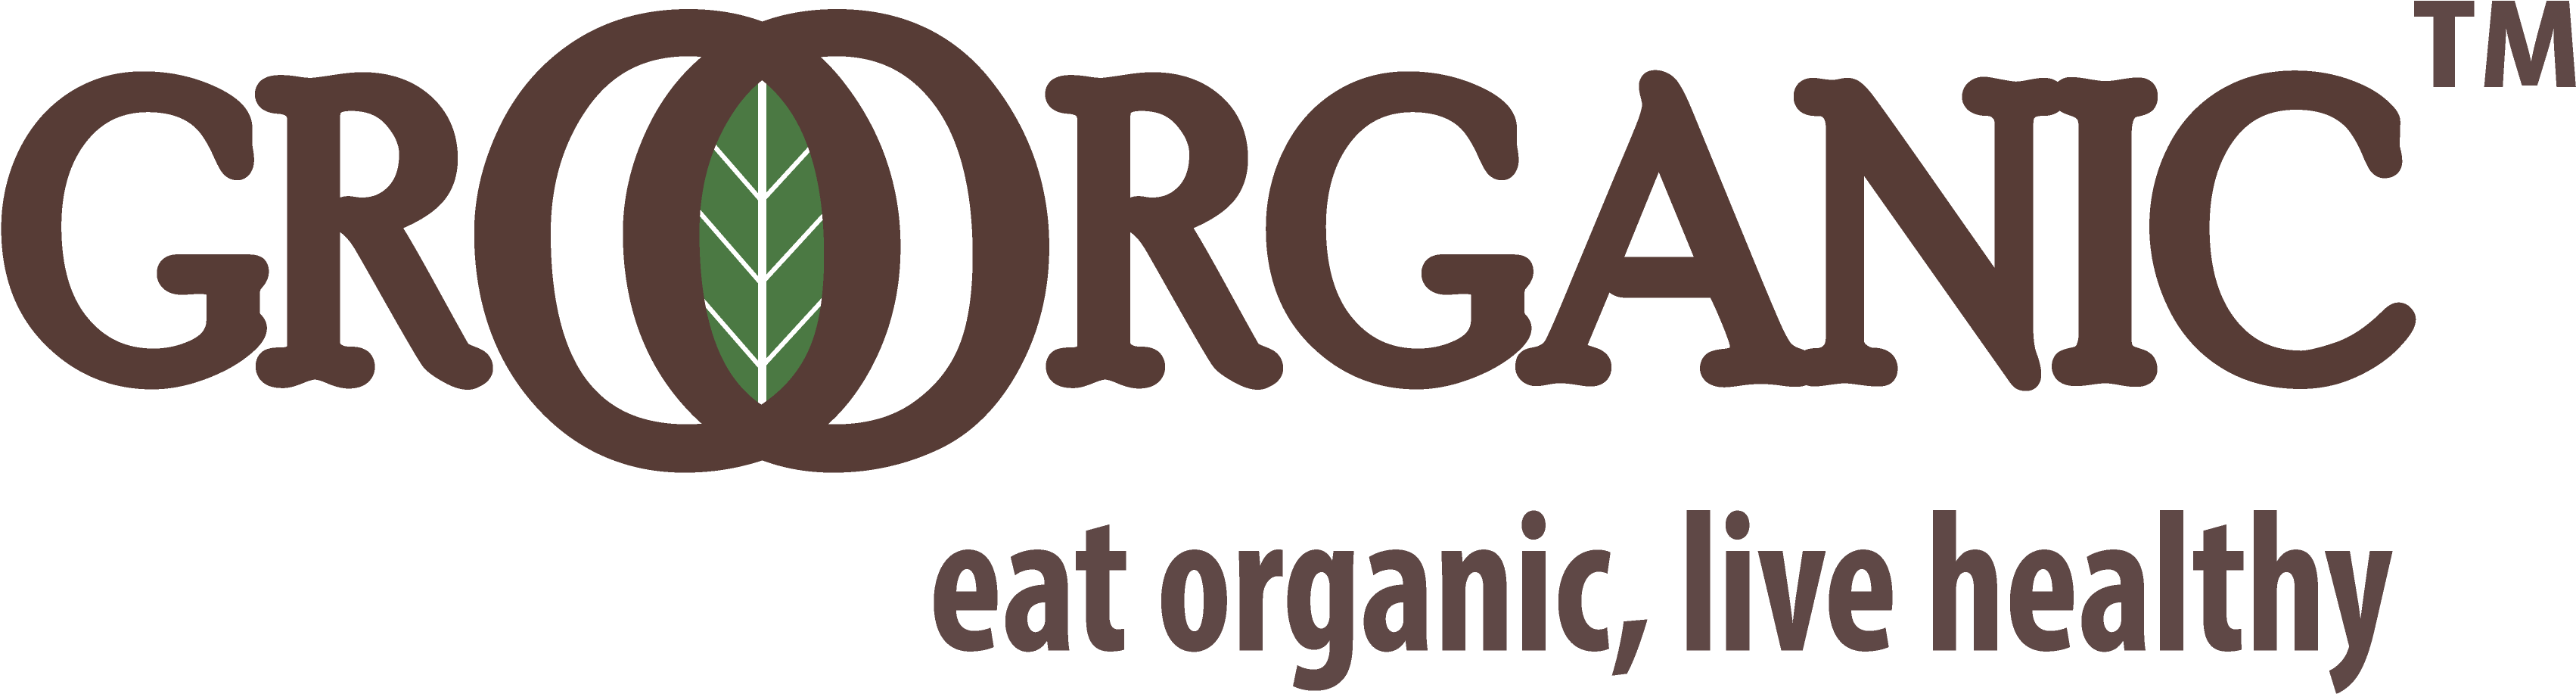 Gro Organics - Best Restaurant (4062x1500), Png Download